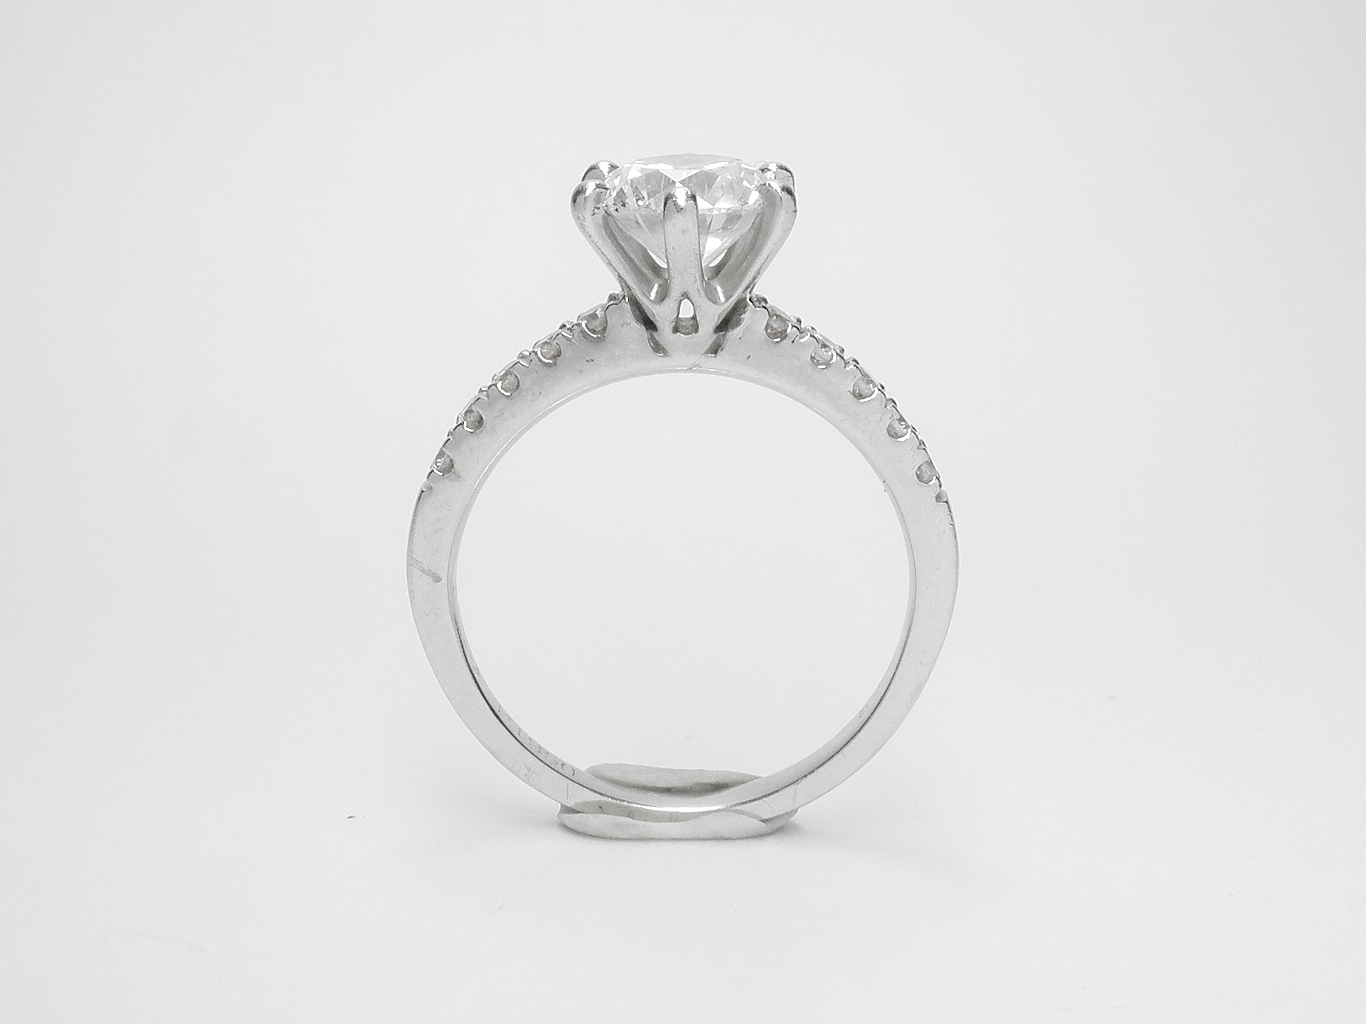 Brilliant Diamond Ring With Diamond Shoulders Remodel